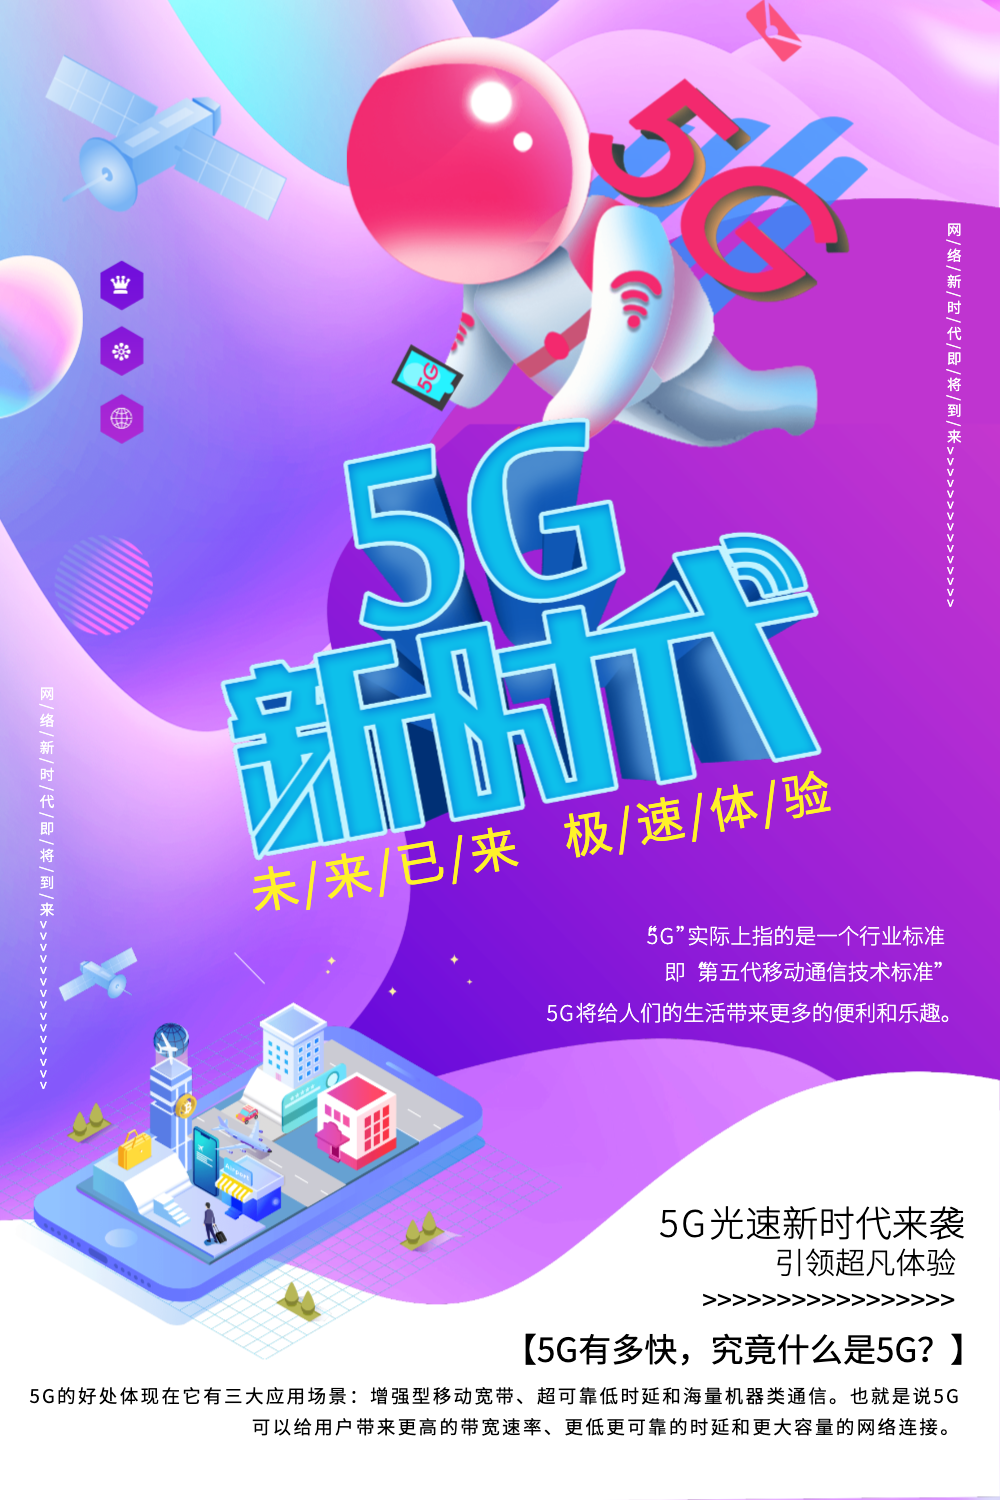 5G 网络覆盖上海，引领全新信息时代，生活更便利丰富  第4张